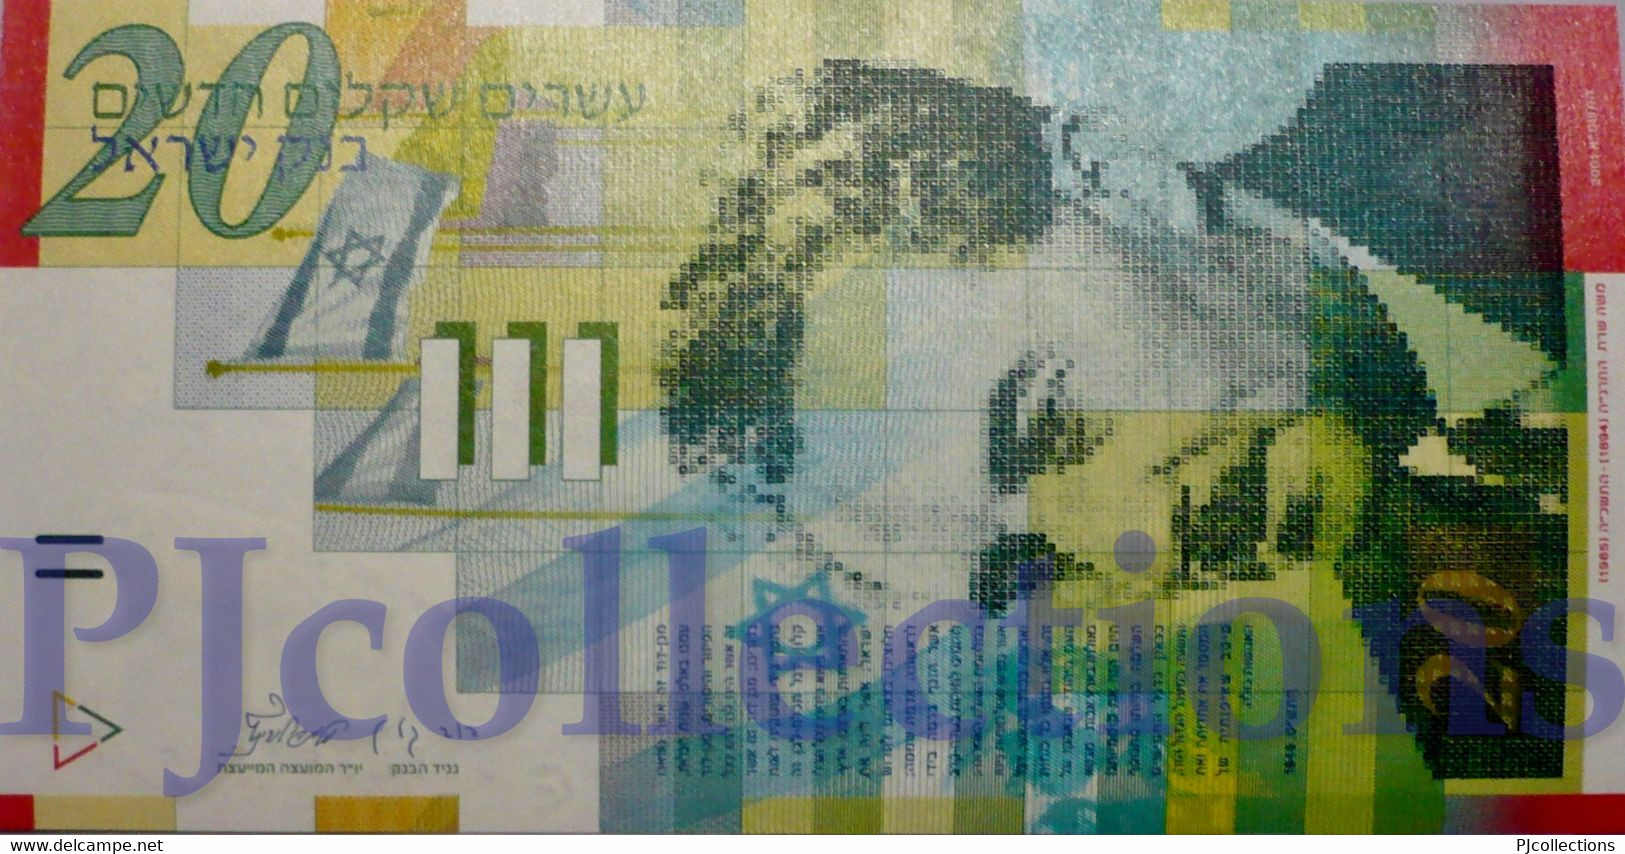 ISRAEL 20 NEW SHEQALIM 2001 PICK 59b UNC - Israel